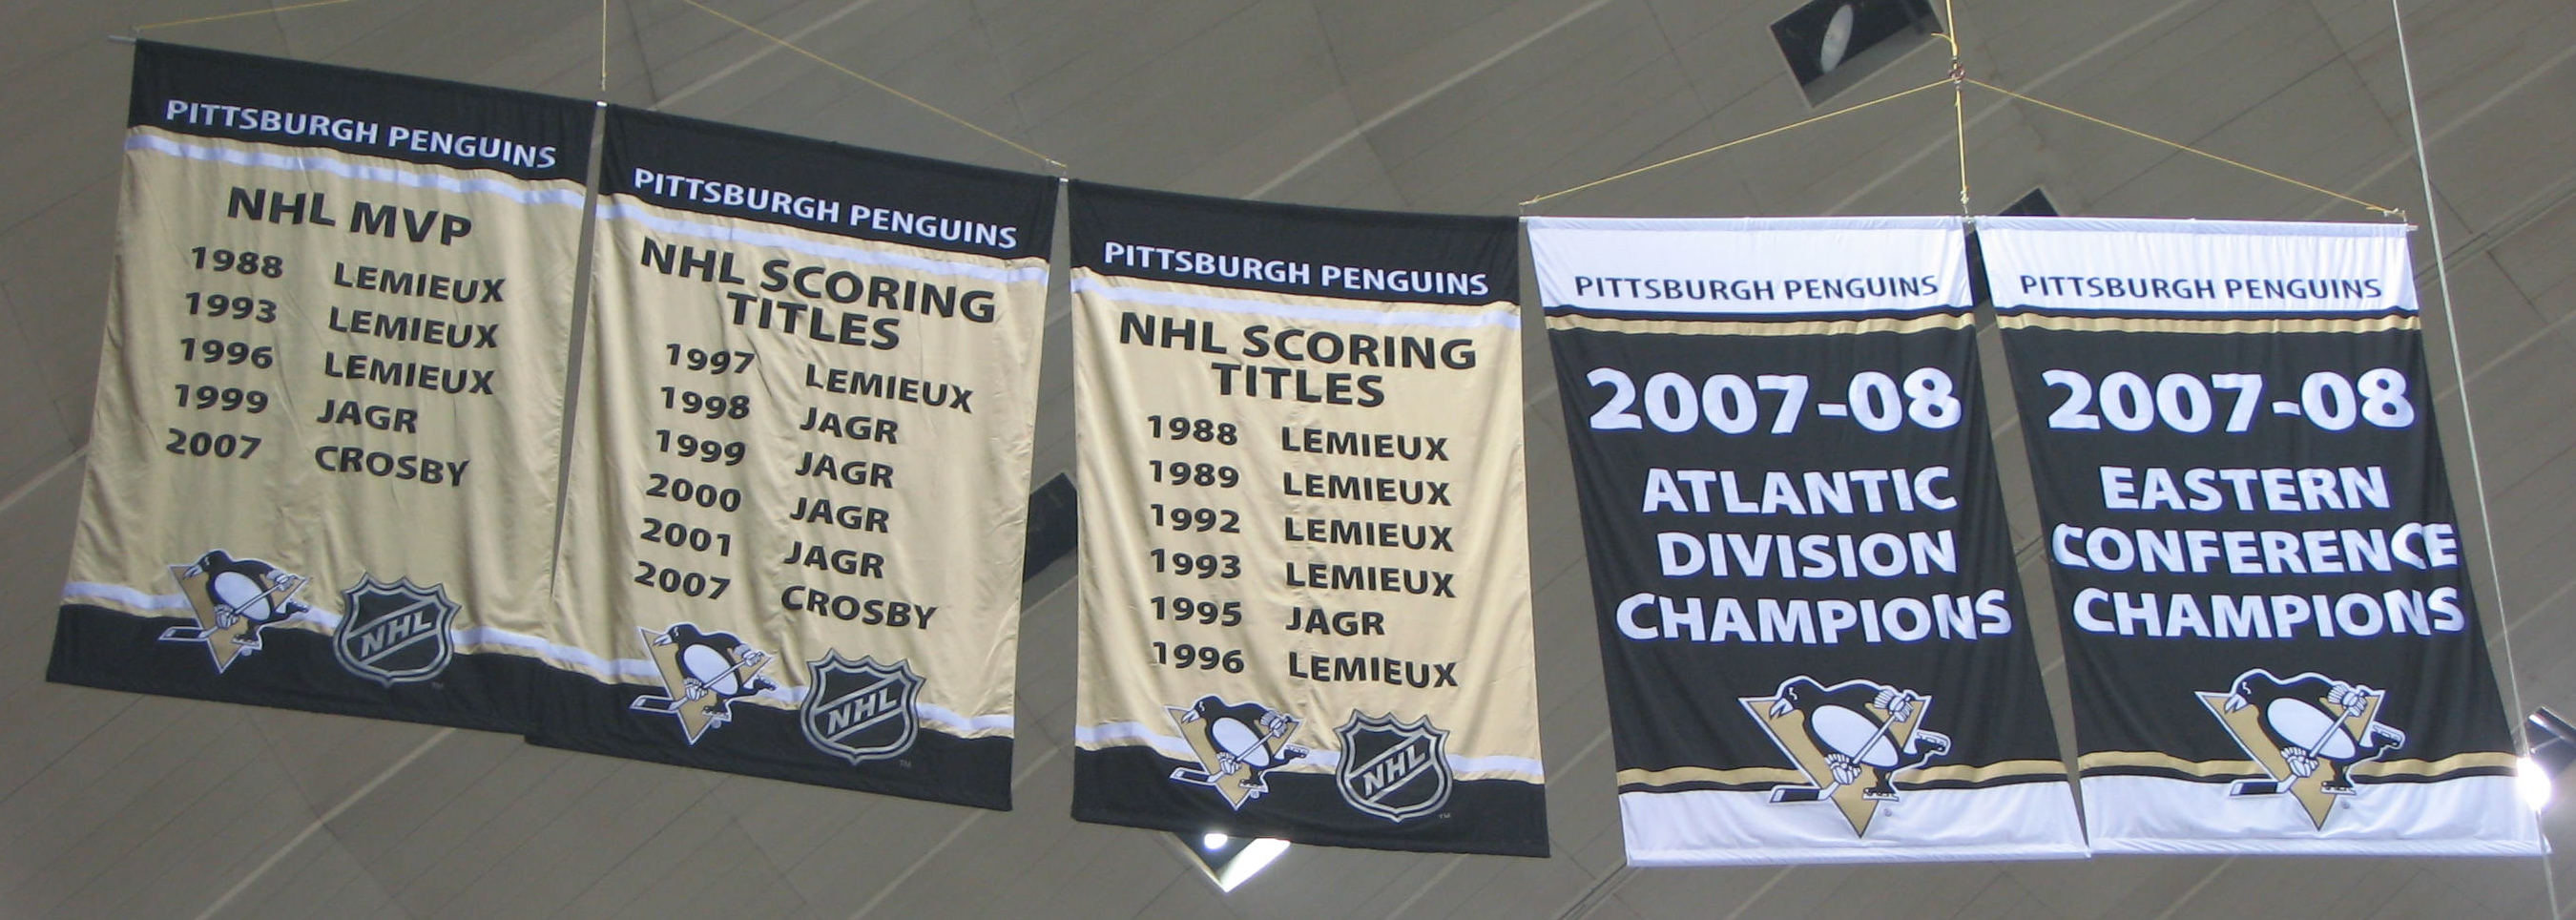 New Pens' banner to honor 2007-2008 season accomplishments